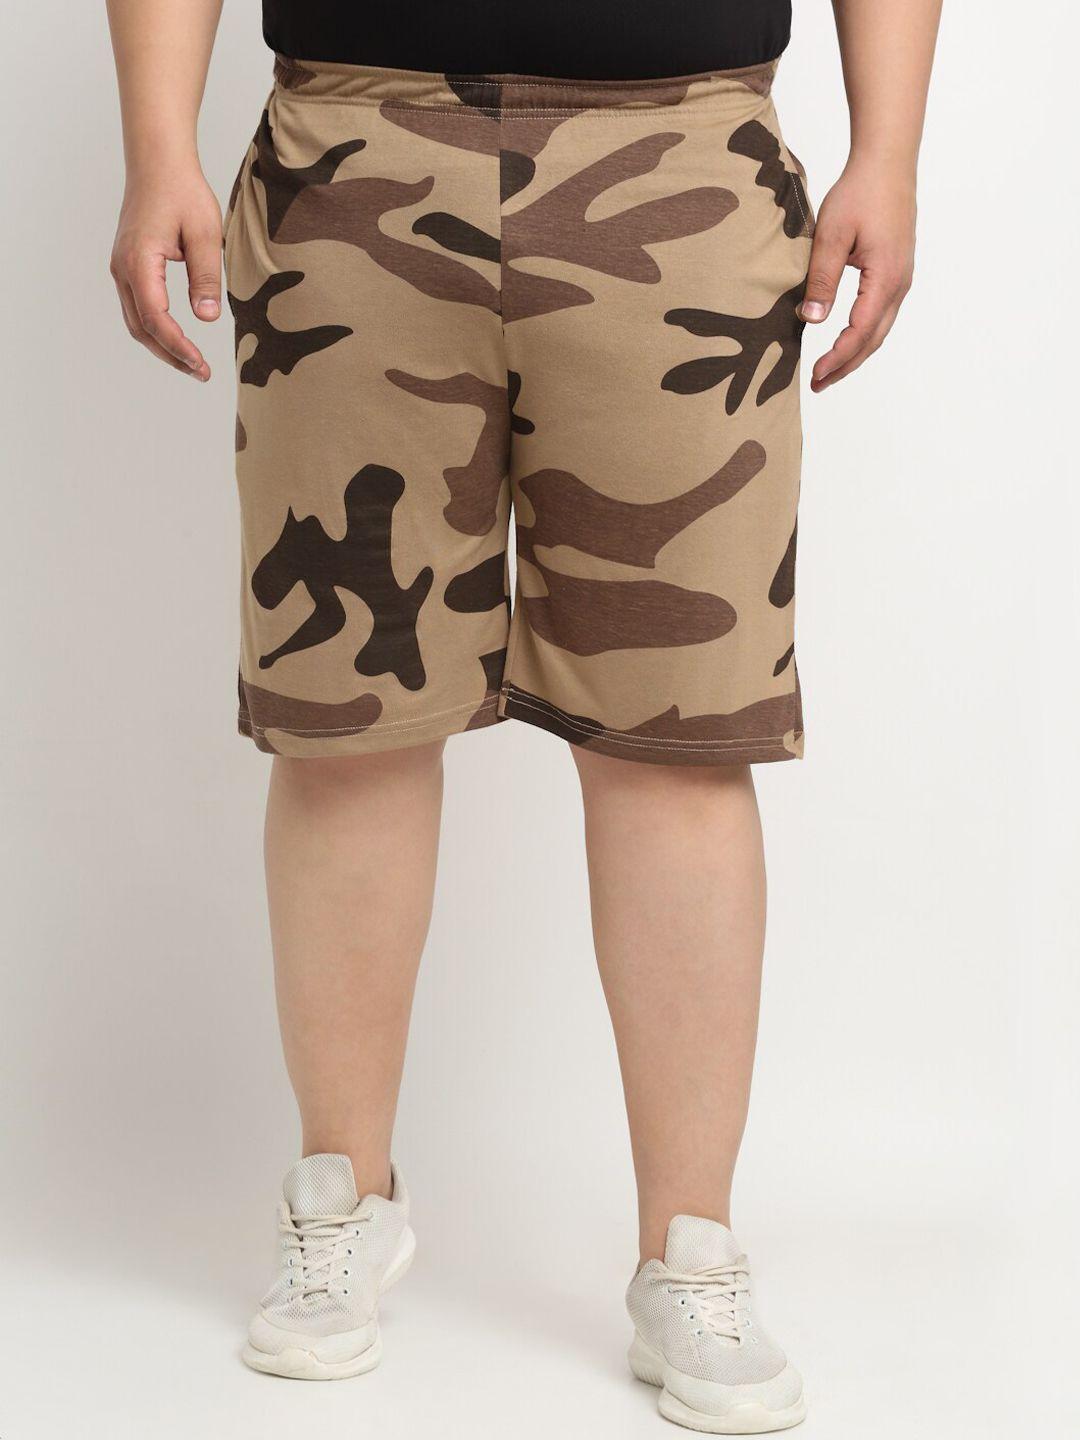 pluss-men-camouflage-printed-cotton-mid-rise-shorts